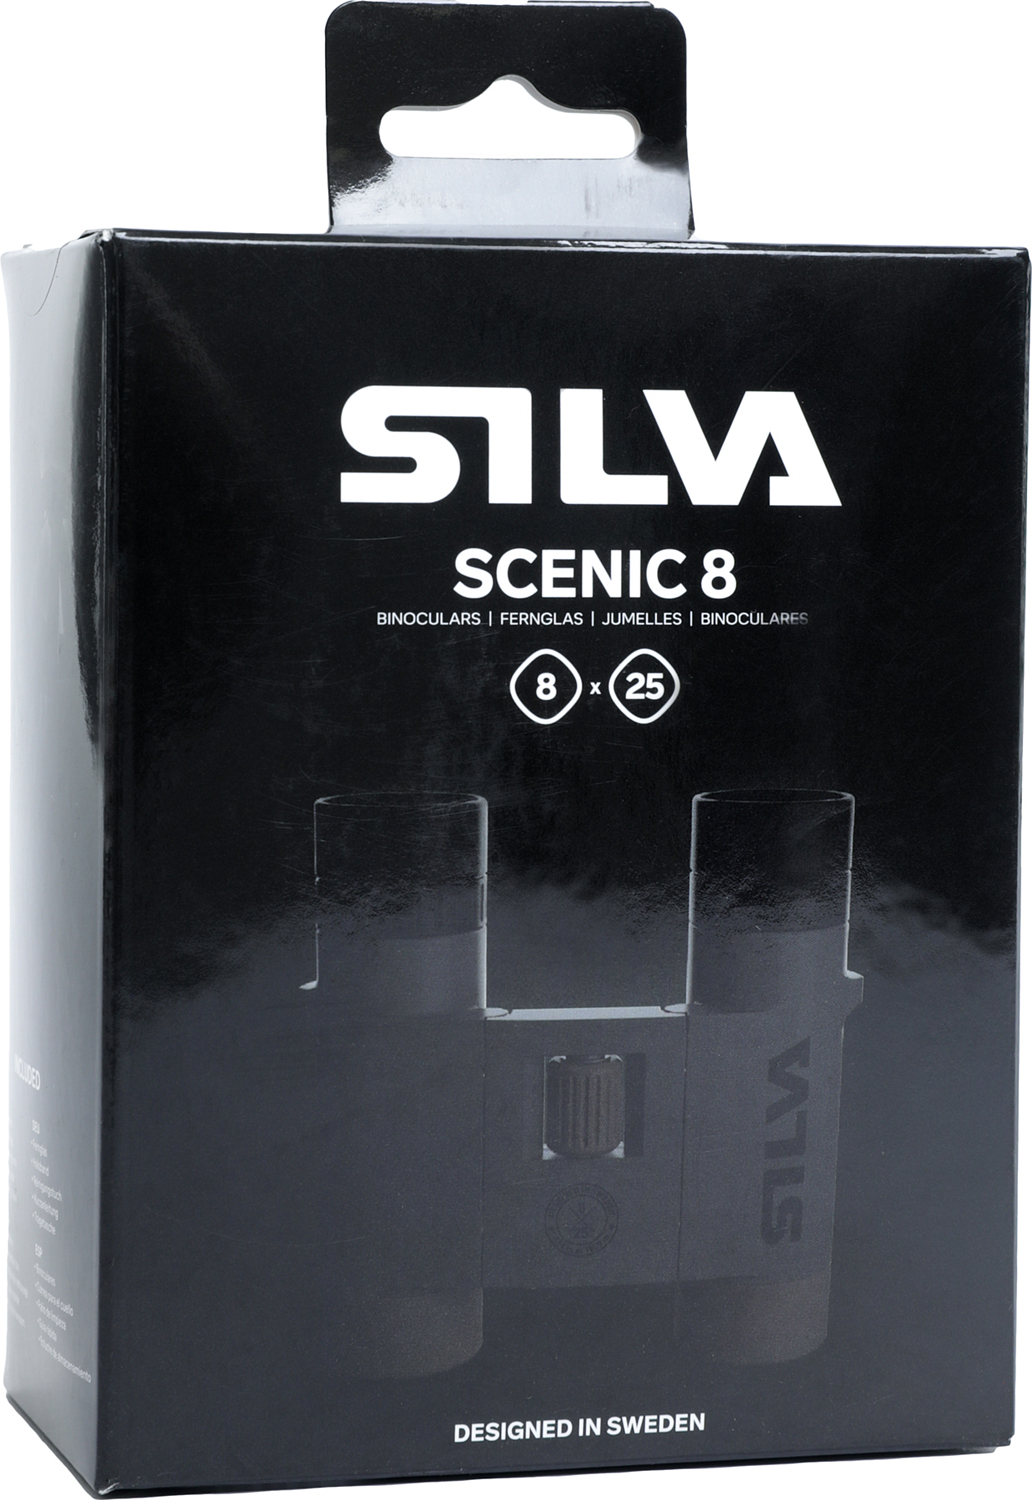 Бинокль Silva Binoculars Scenic 8